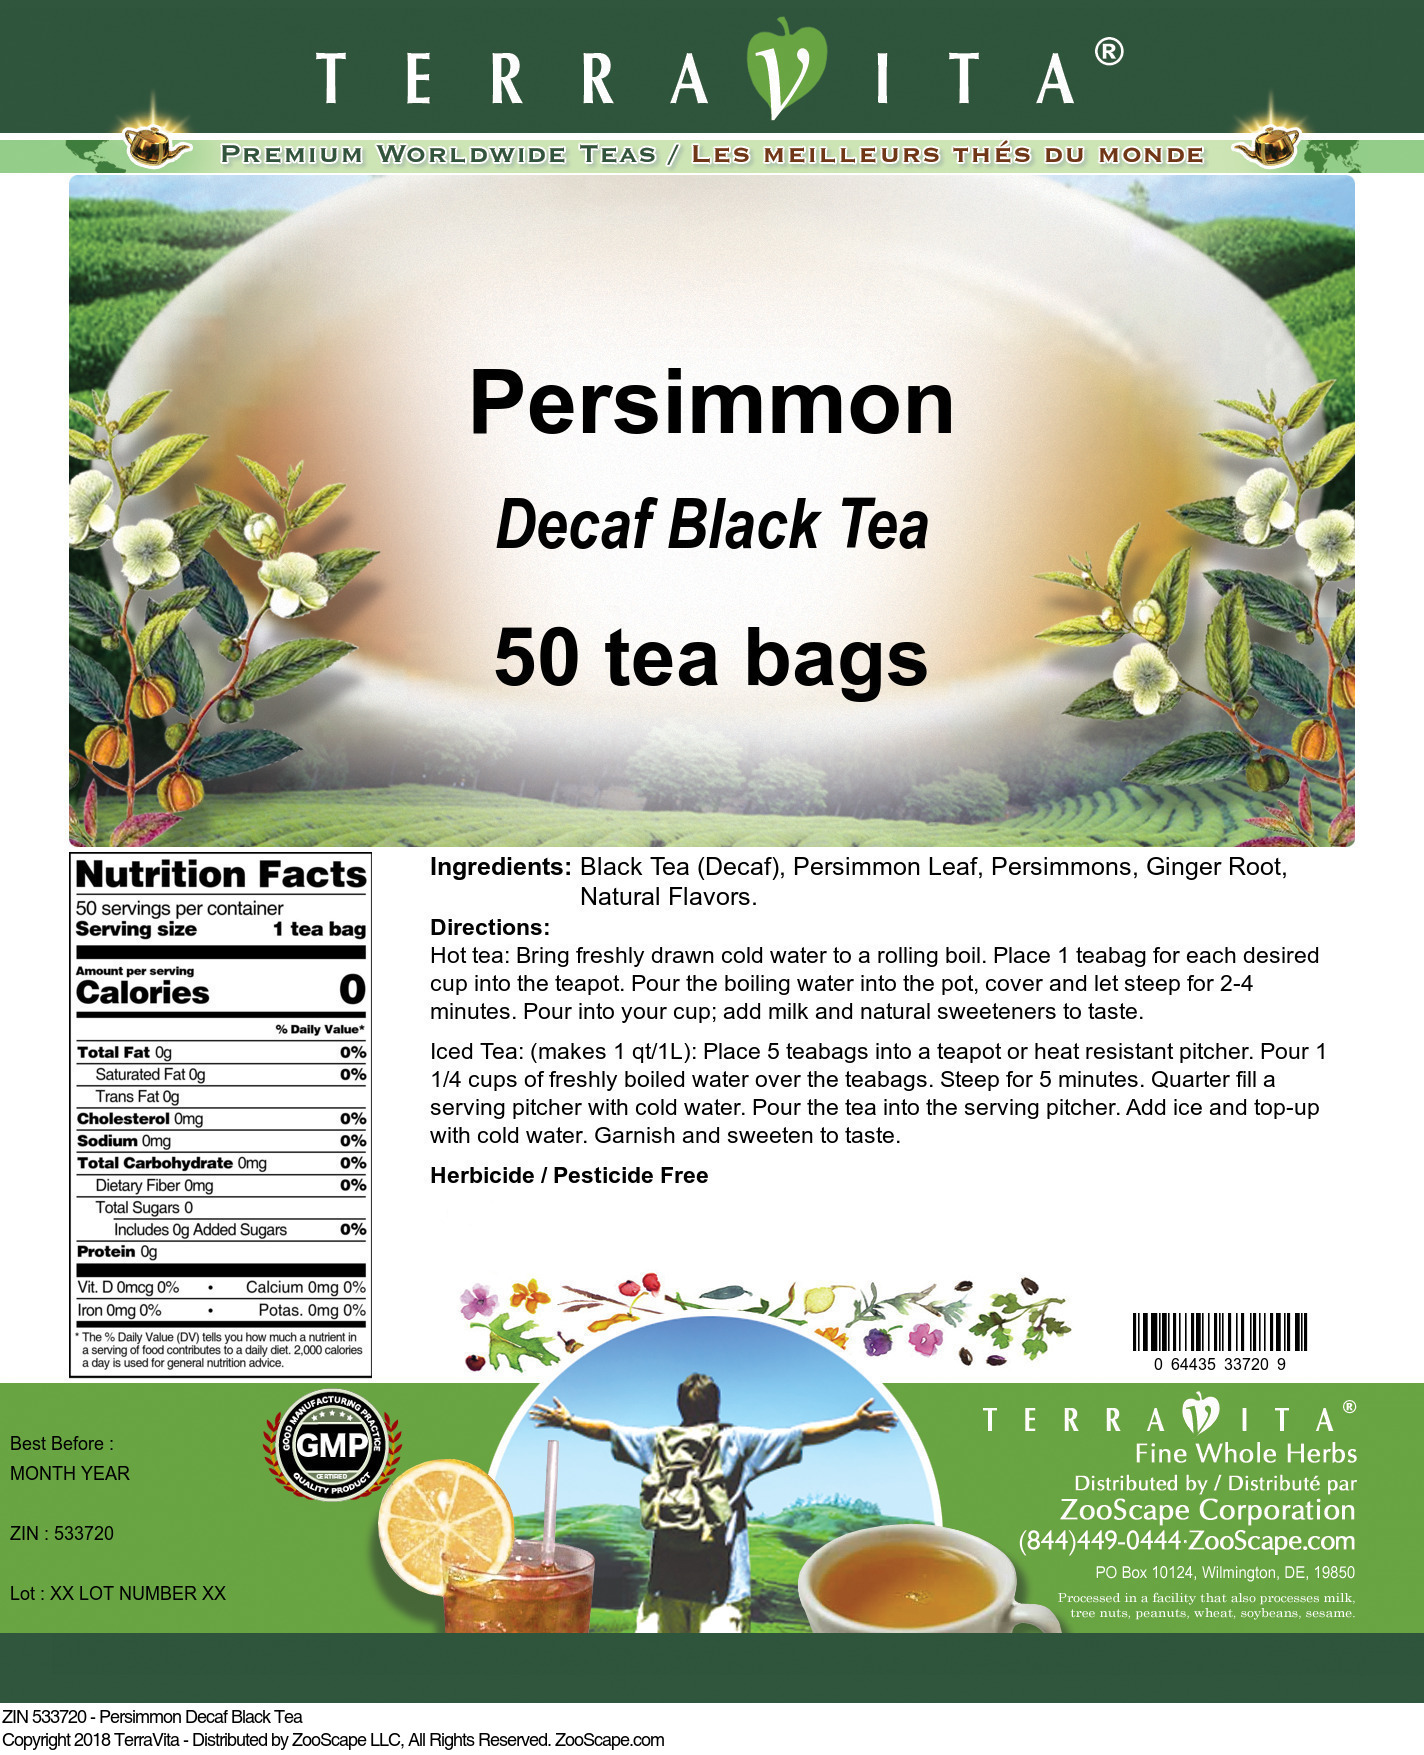 Persimmon Decaf Black Tea - Label